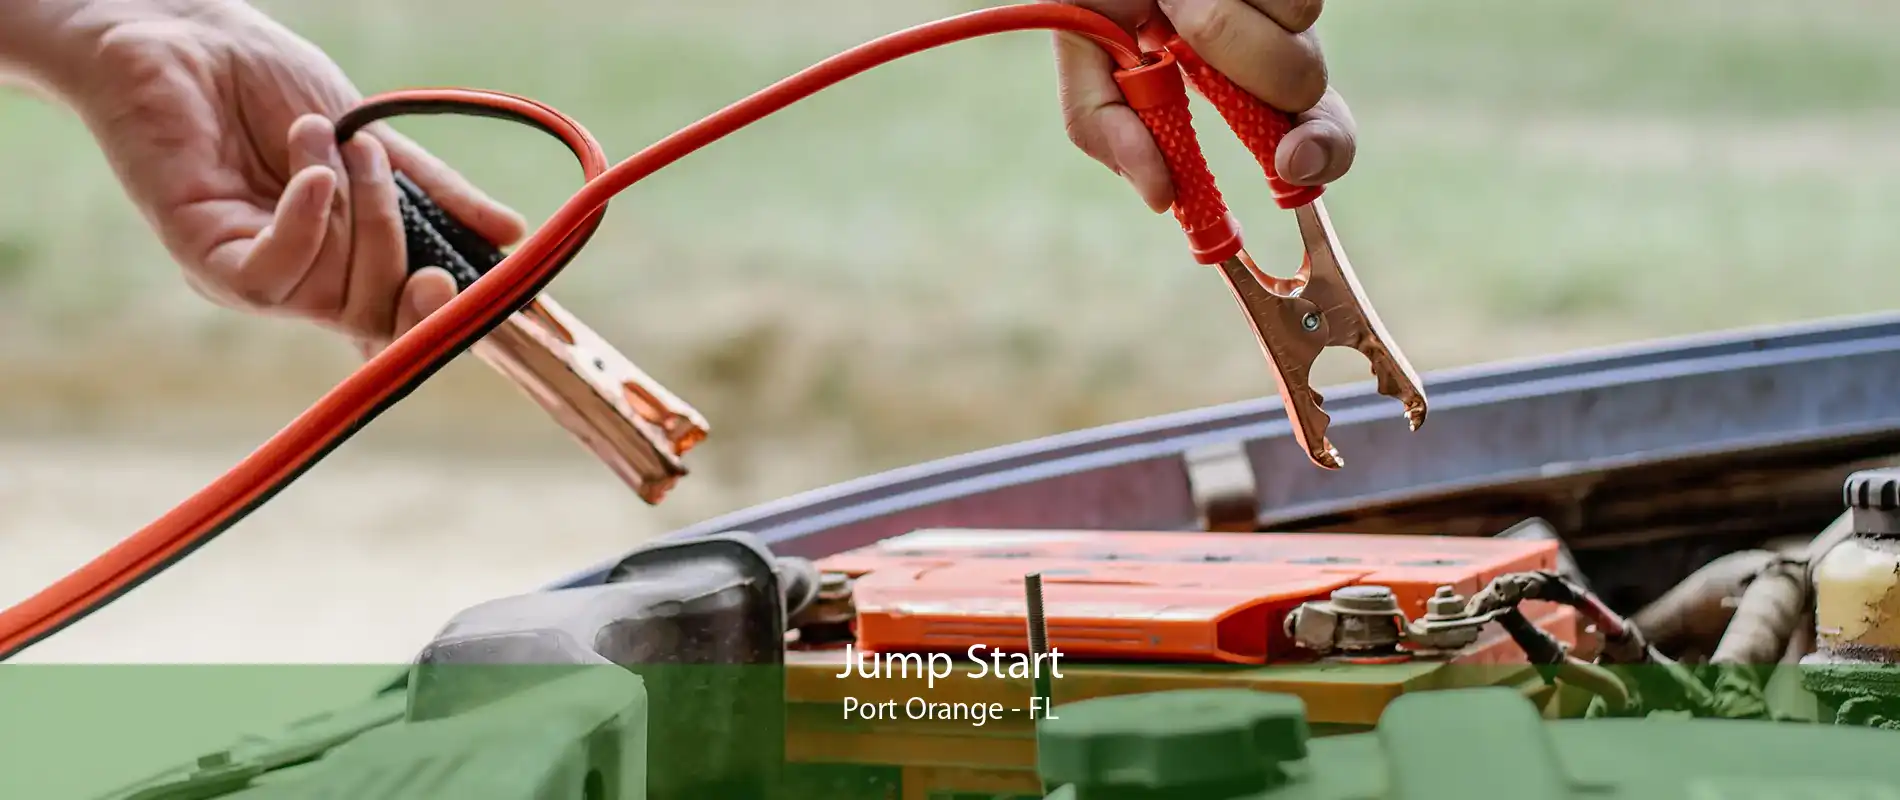 Jump Start Port Orange - FL